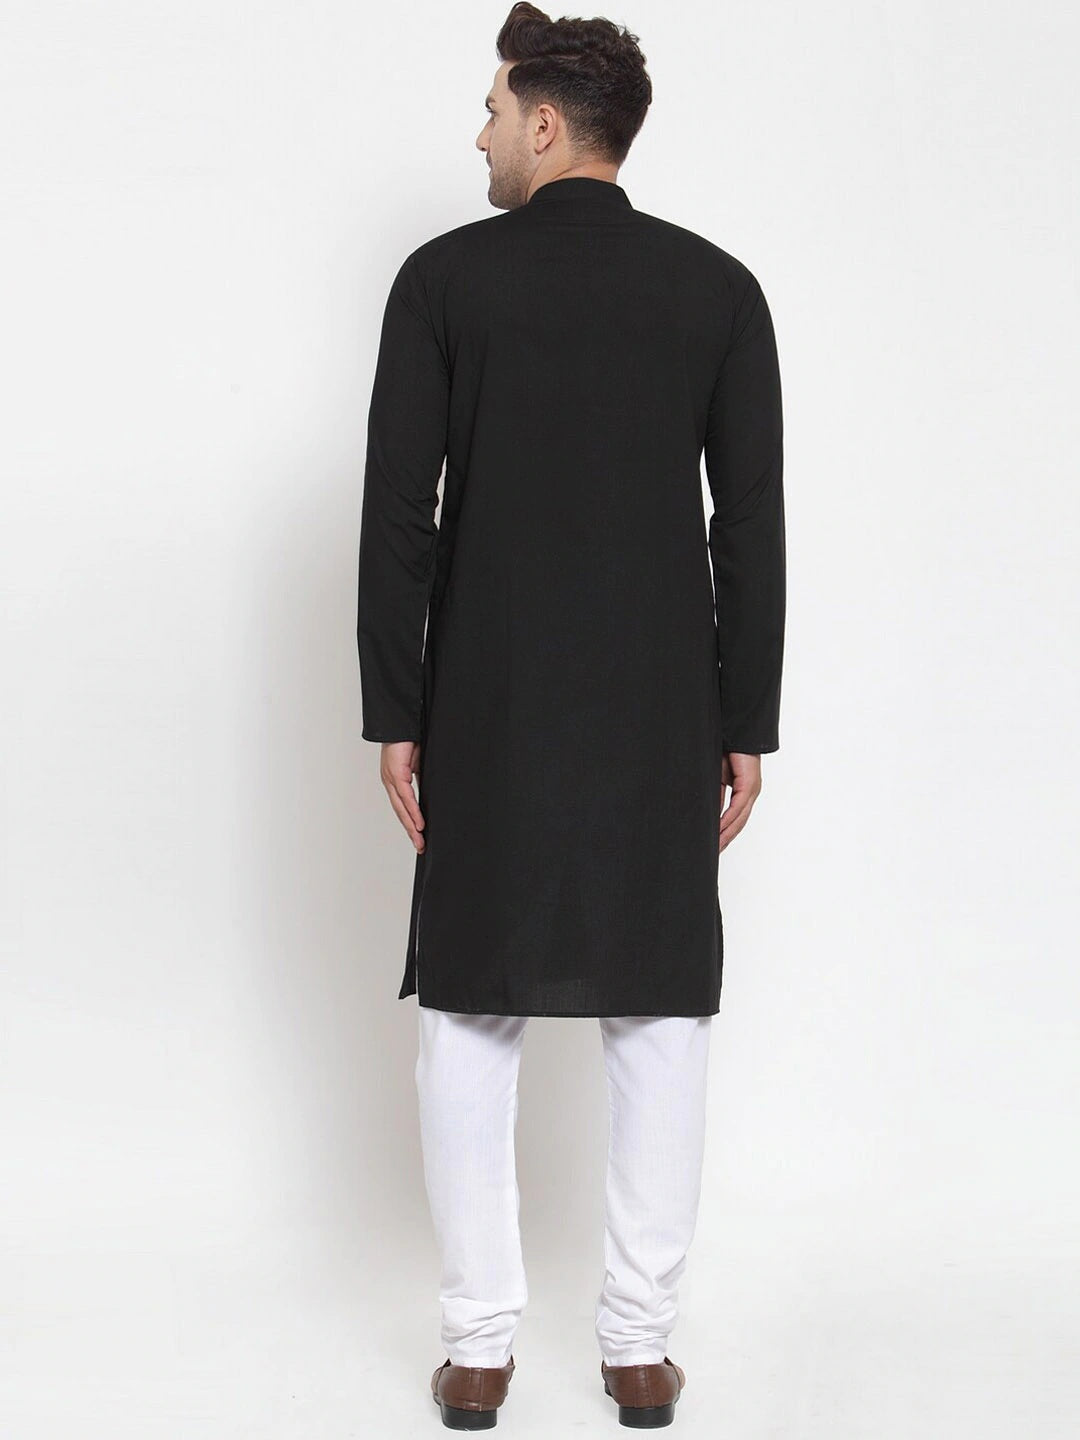 Jompers Men's Black Cotton Solid Kurta Payjama Sets